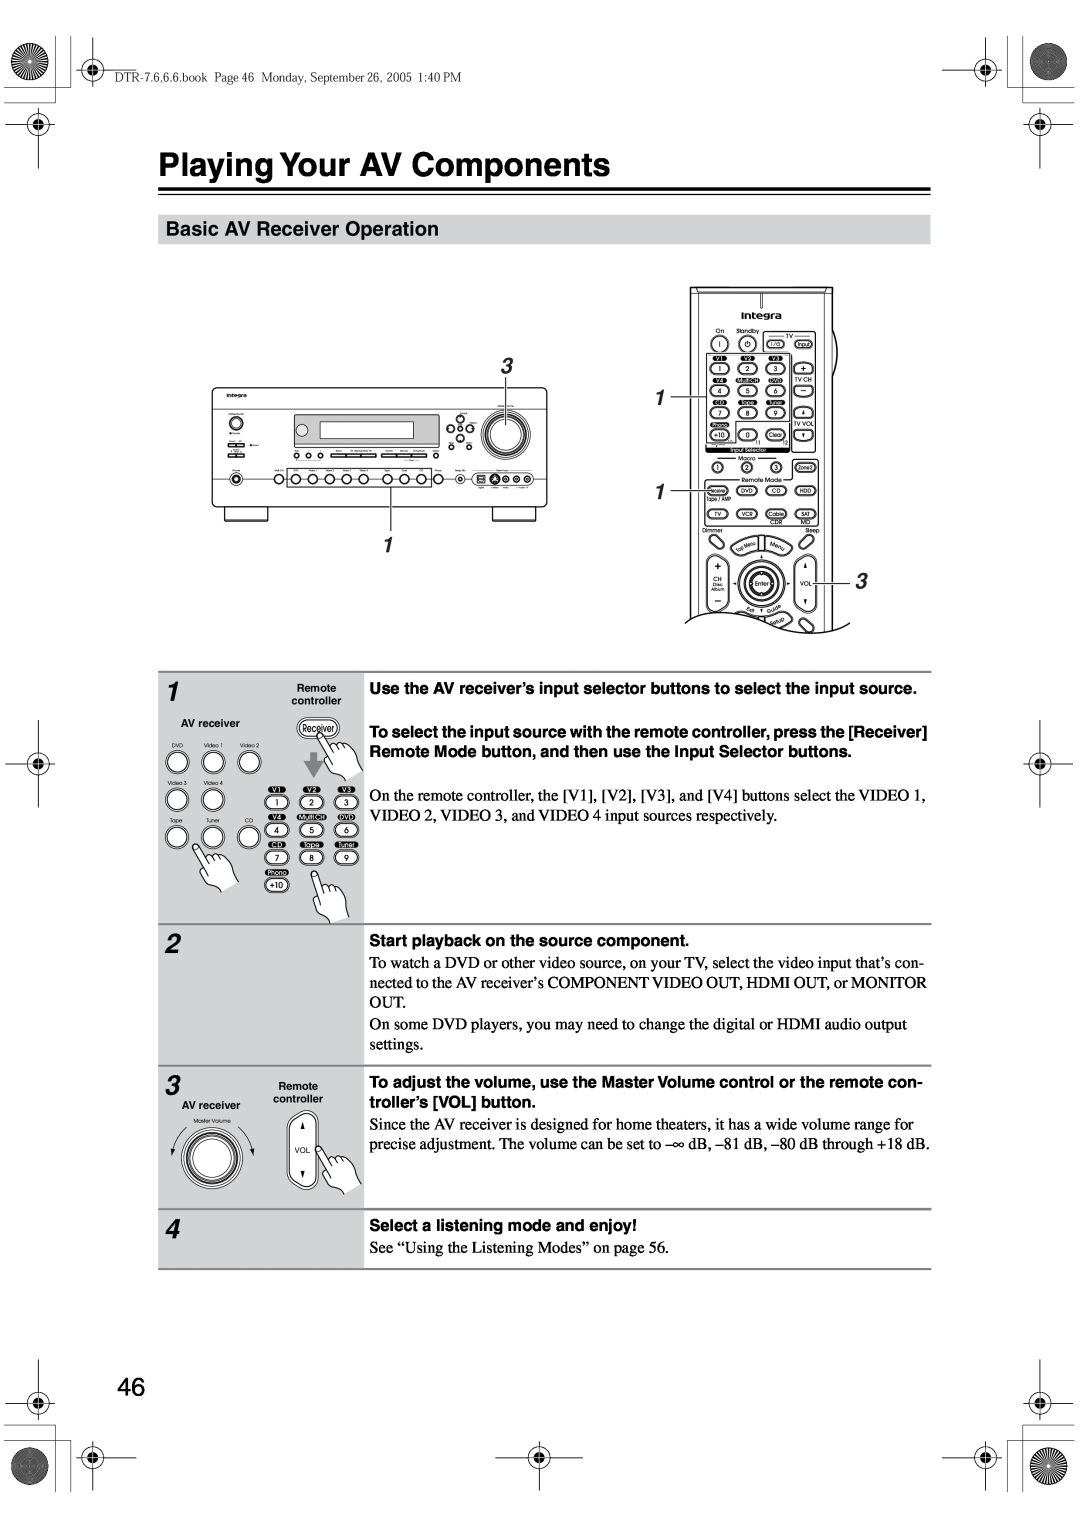 Integra DTR-7.6/6.6 instruction manual Playing Your AV Components, 3 1 1 1 3, Basic AV Receiver Operation 